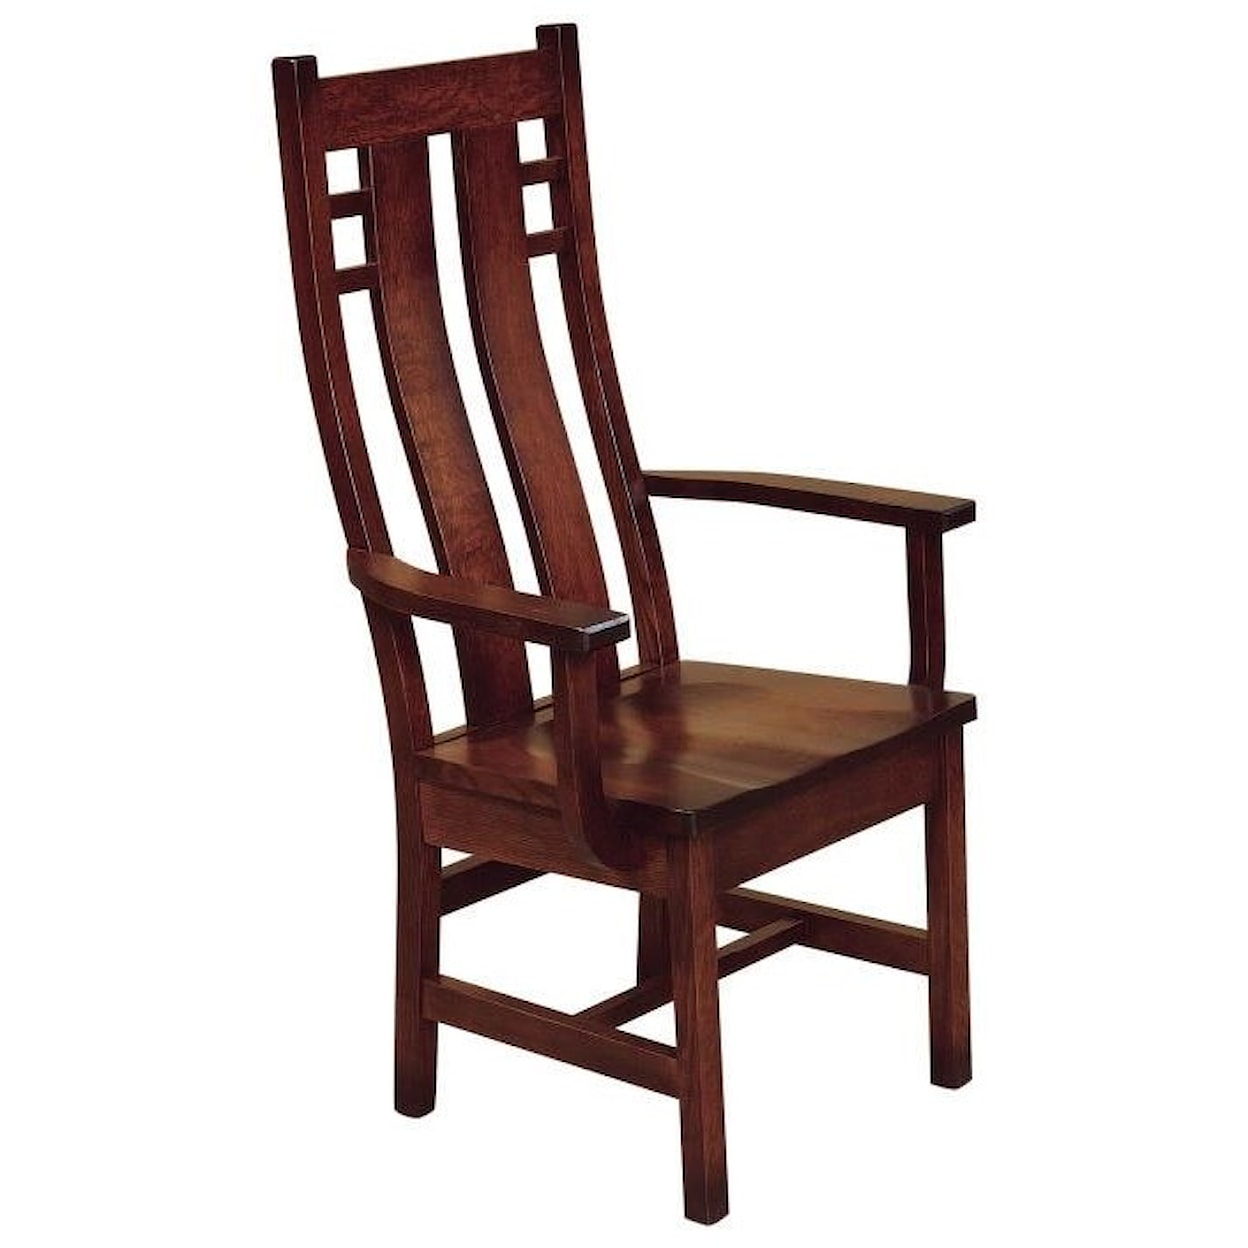 F&N Woodworking Cascade Arm Chair